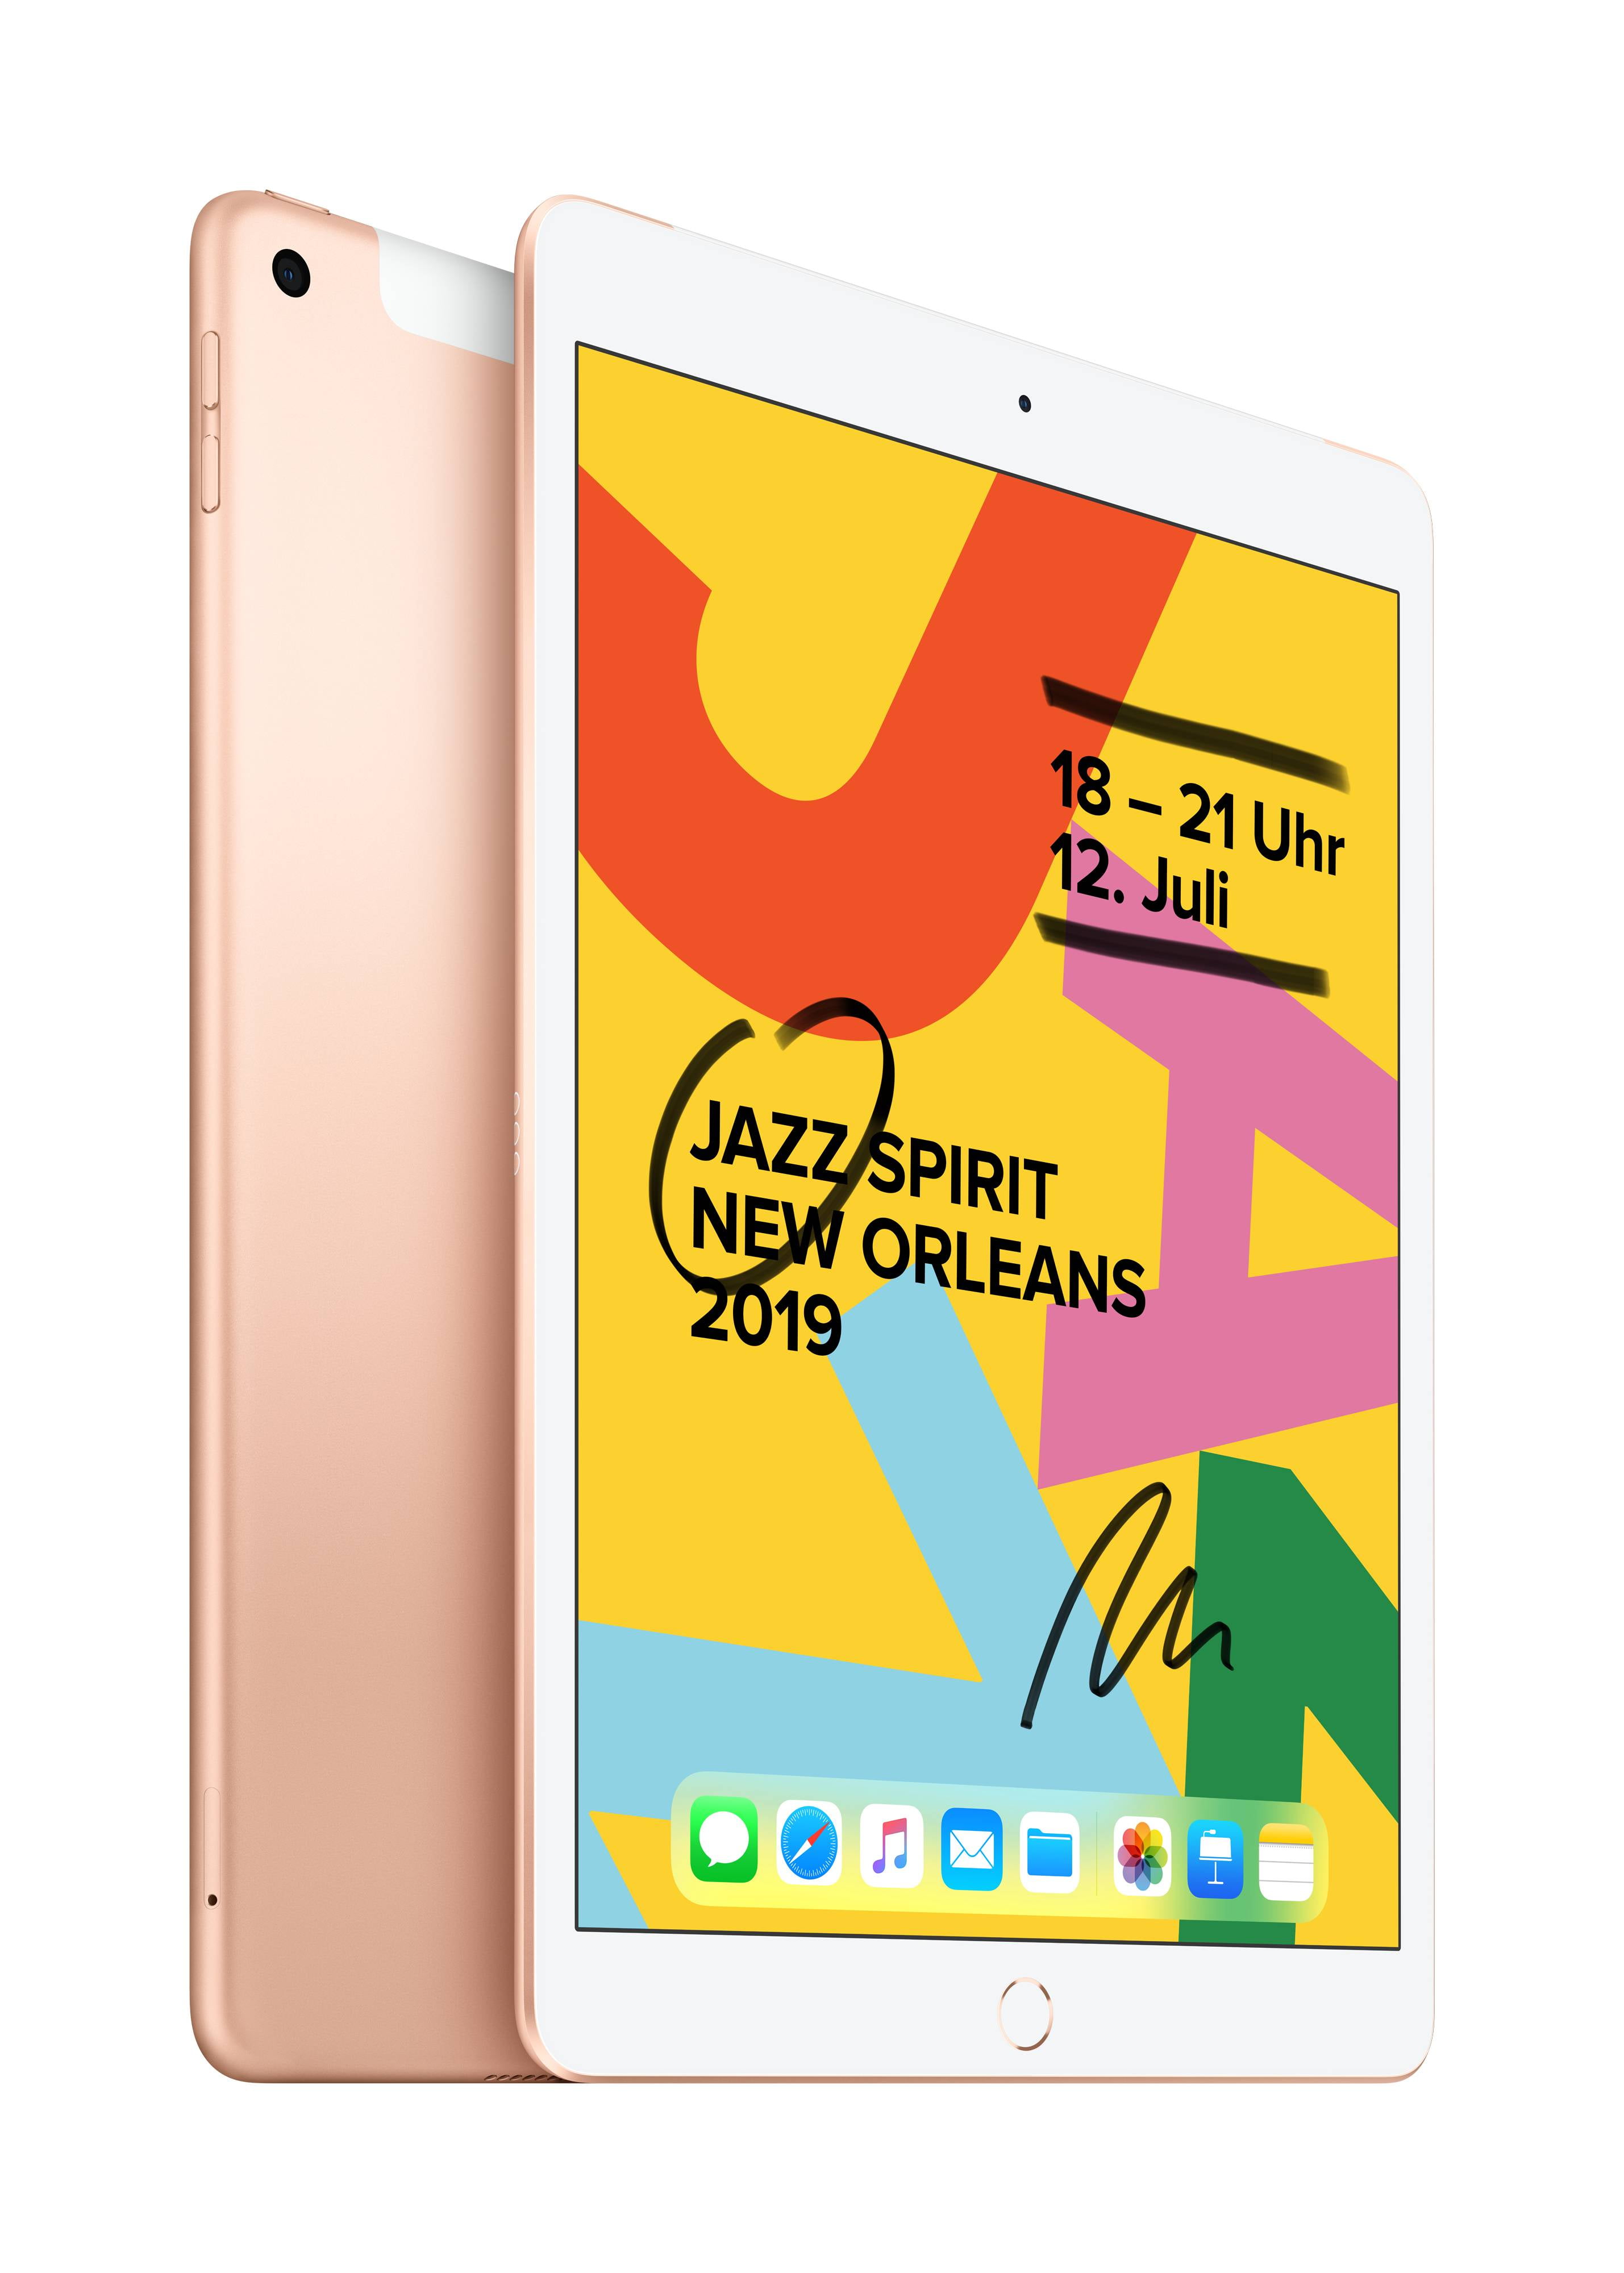 Apple iPad 7th Generation (2019) 10.2 32GB WIFI ONLY Grey B Grade